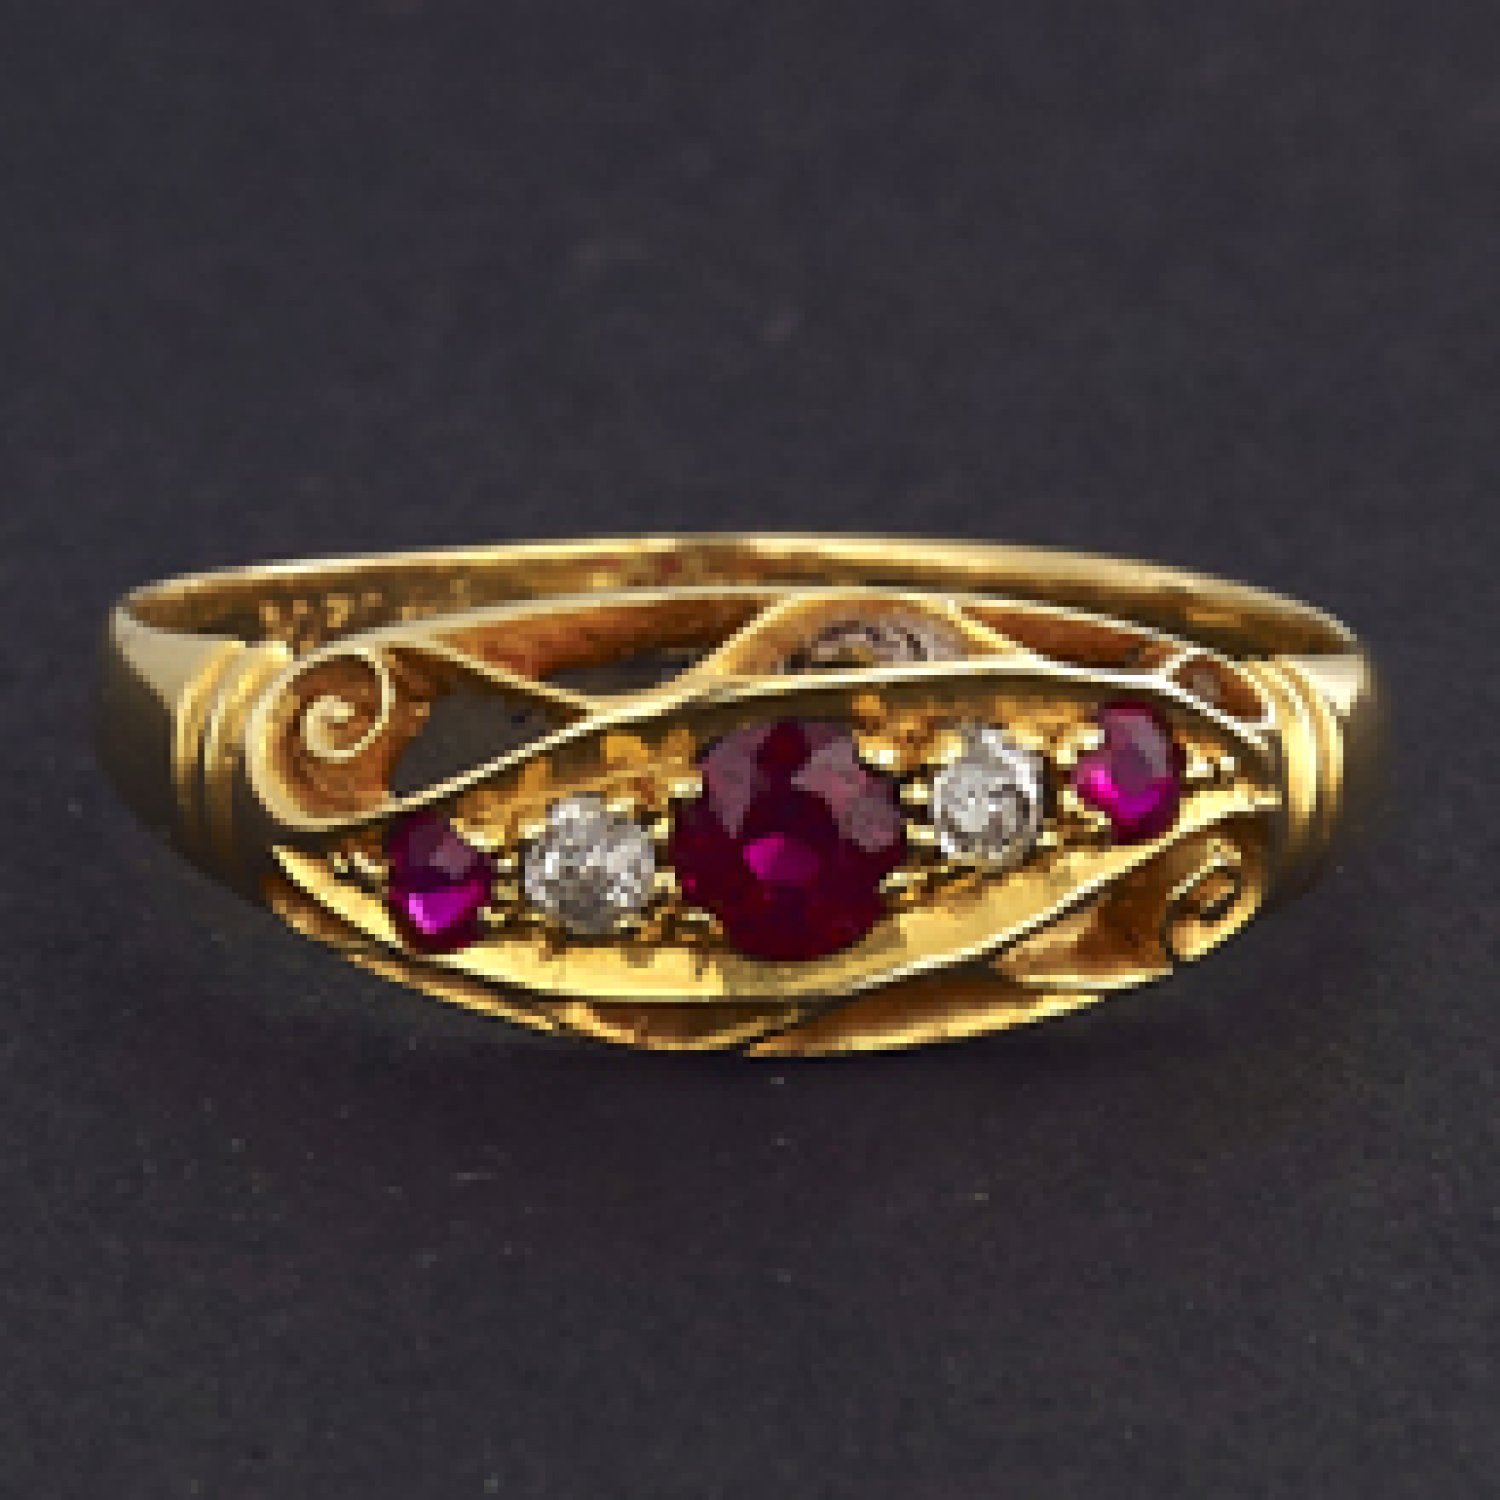 18ct yellow gold ruby & diamond ring